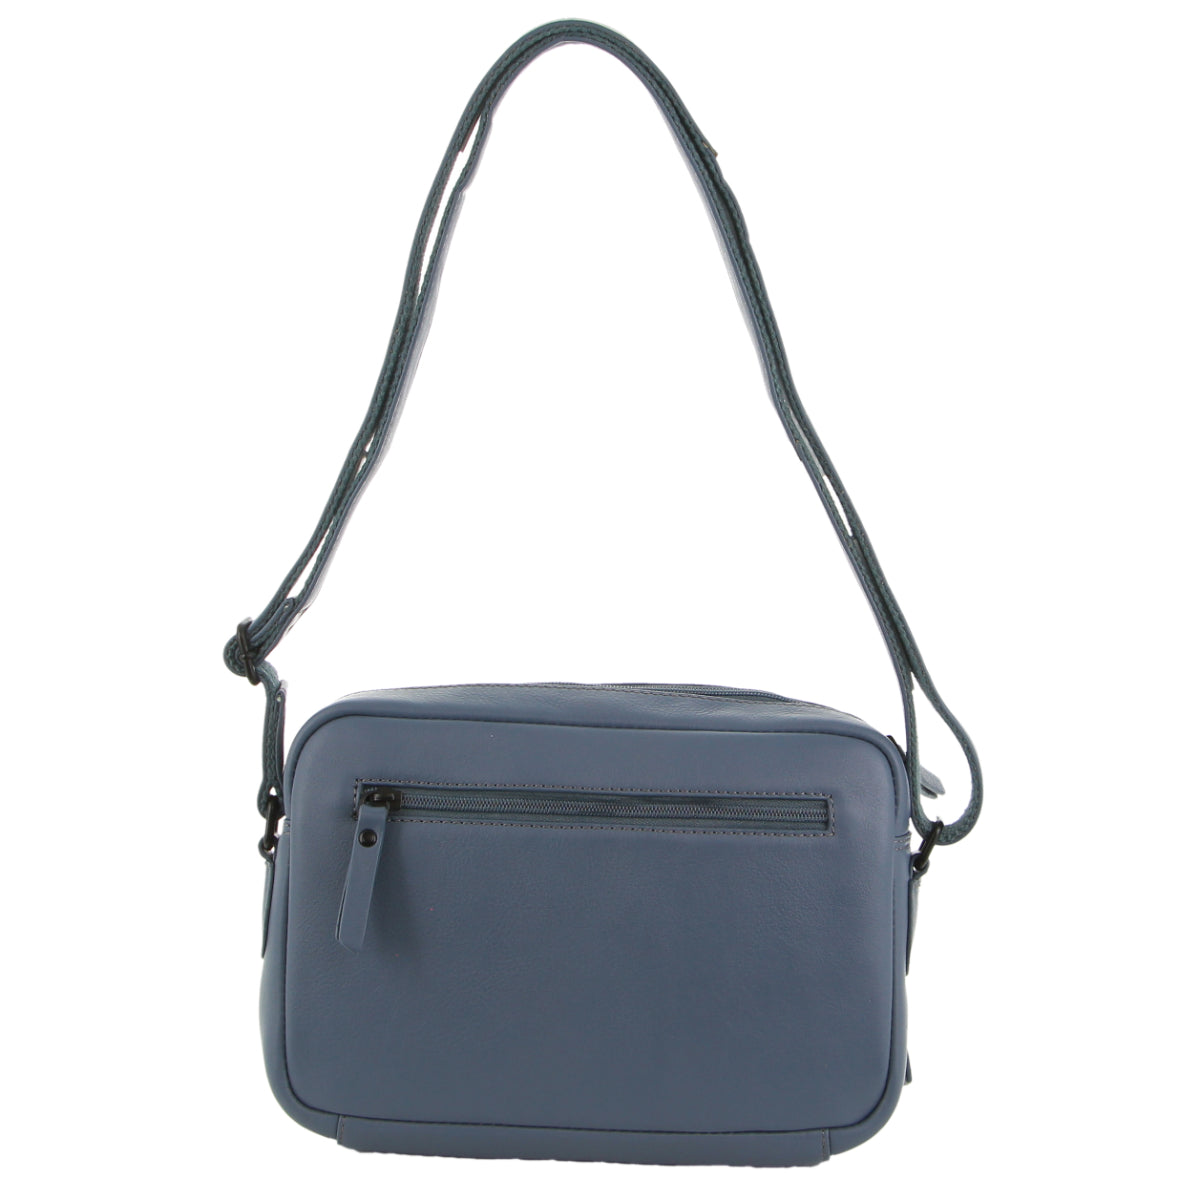 Milleni - NL3871 Small leather sidebag - Teal-1